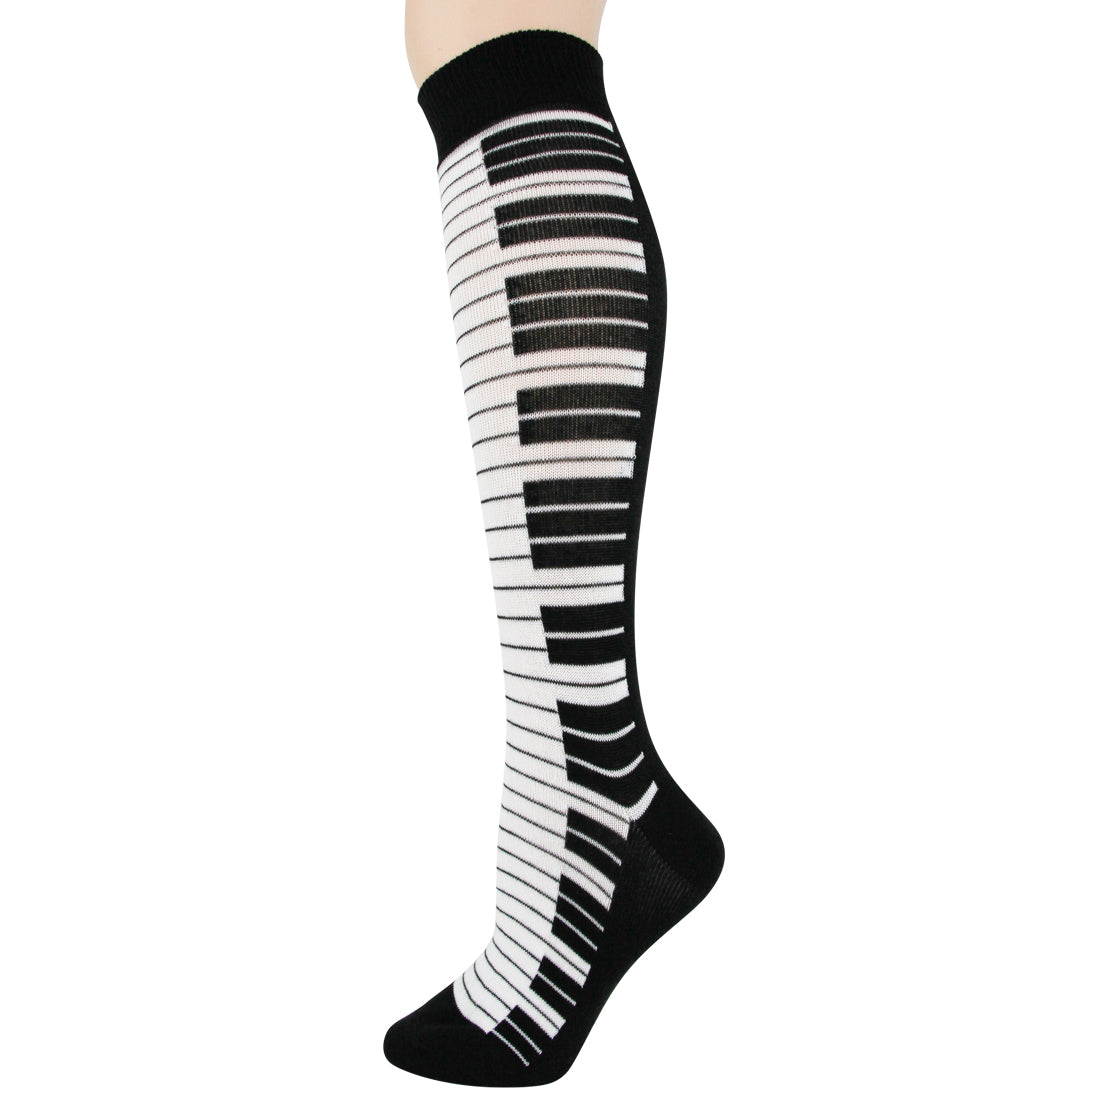 Socks: Piano Keyboard Knee High